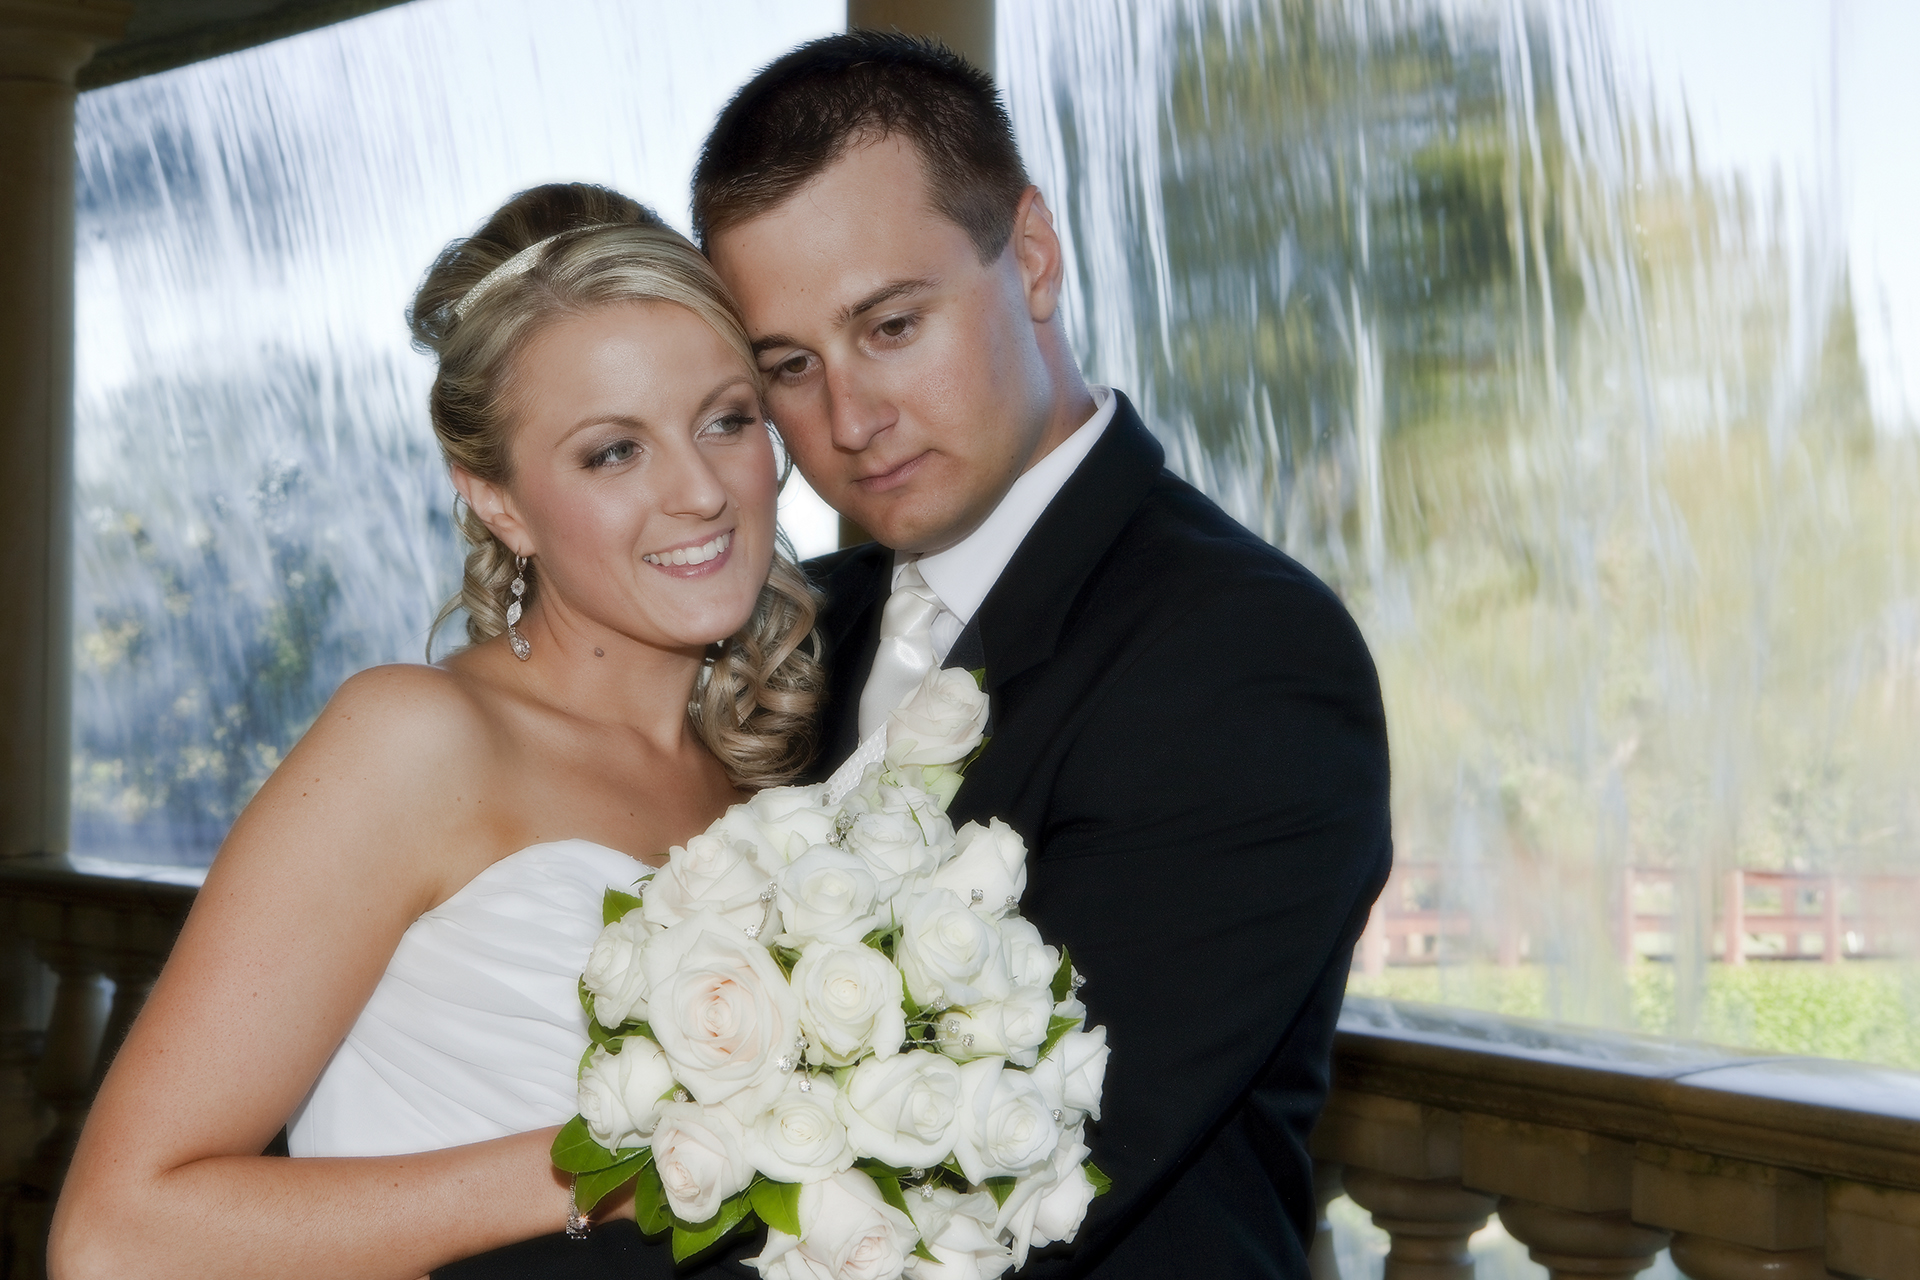 Wedding Photography Perth - Caversham House - Belinda Aaron - Waterfall Background